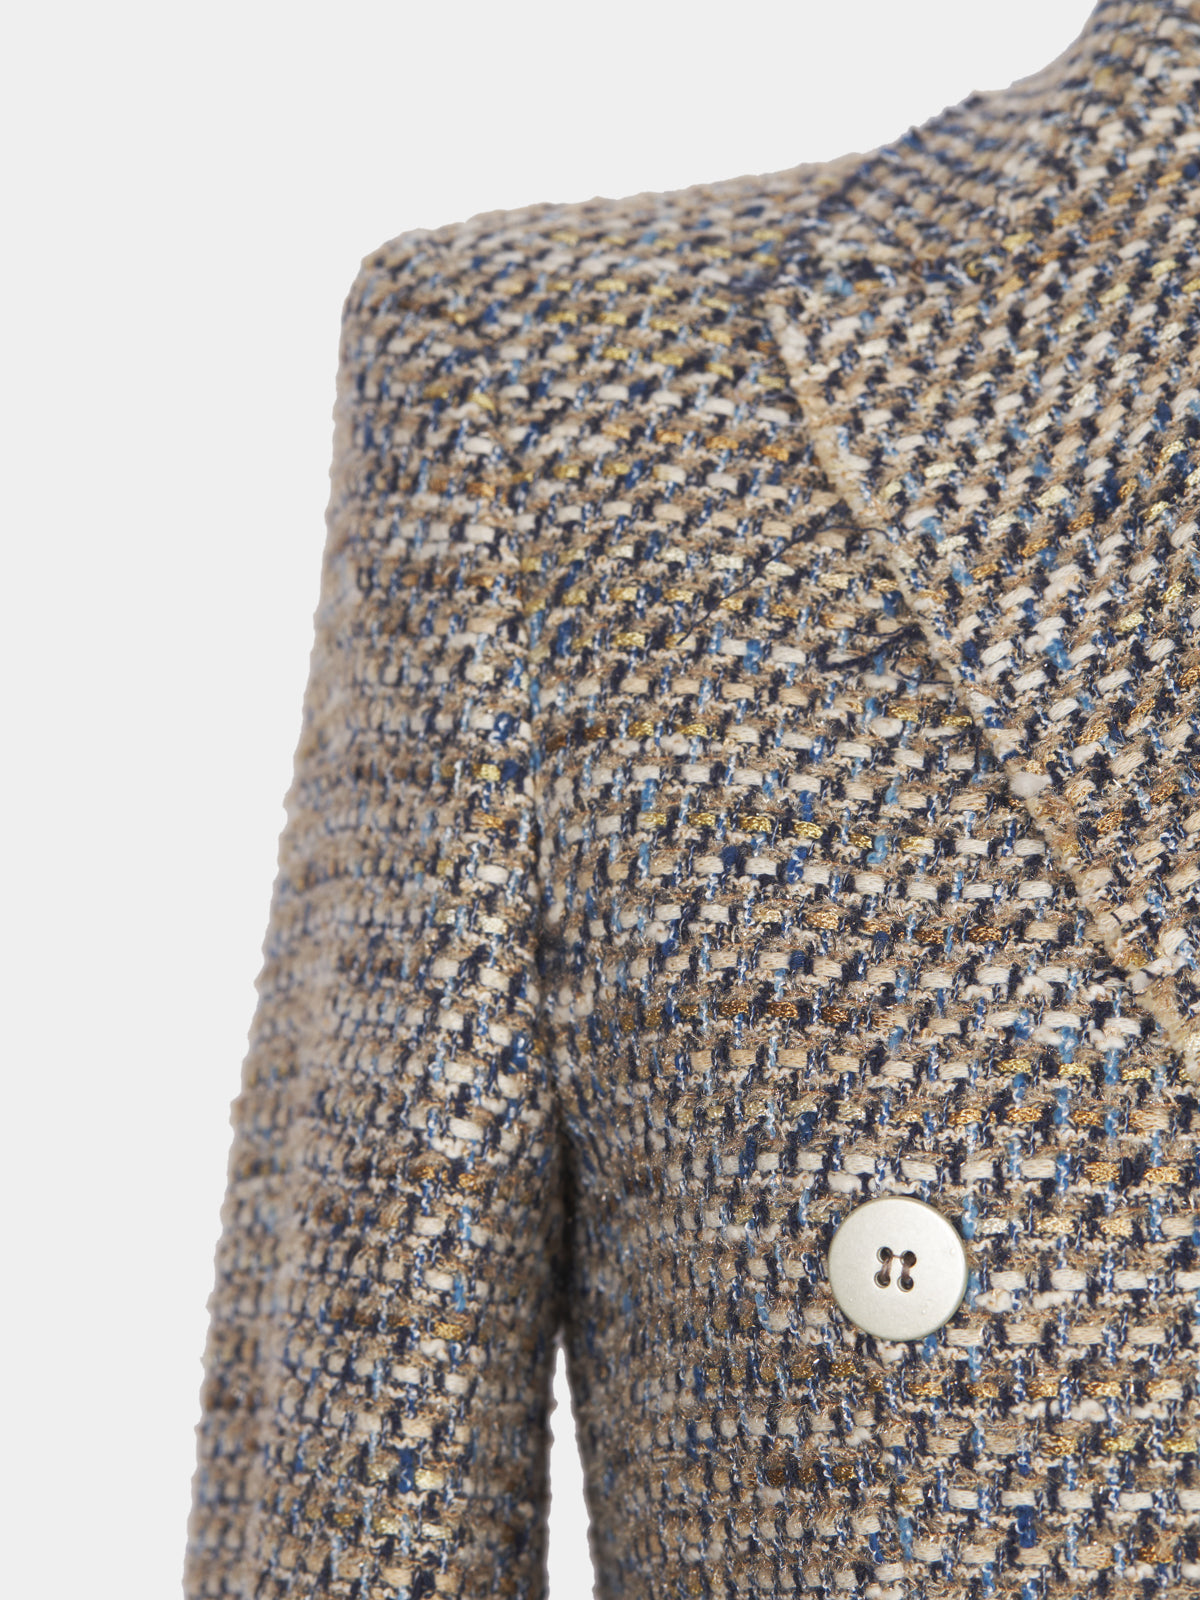 Beige raw cut tweed double-breasted jacket